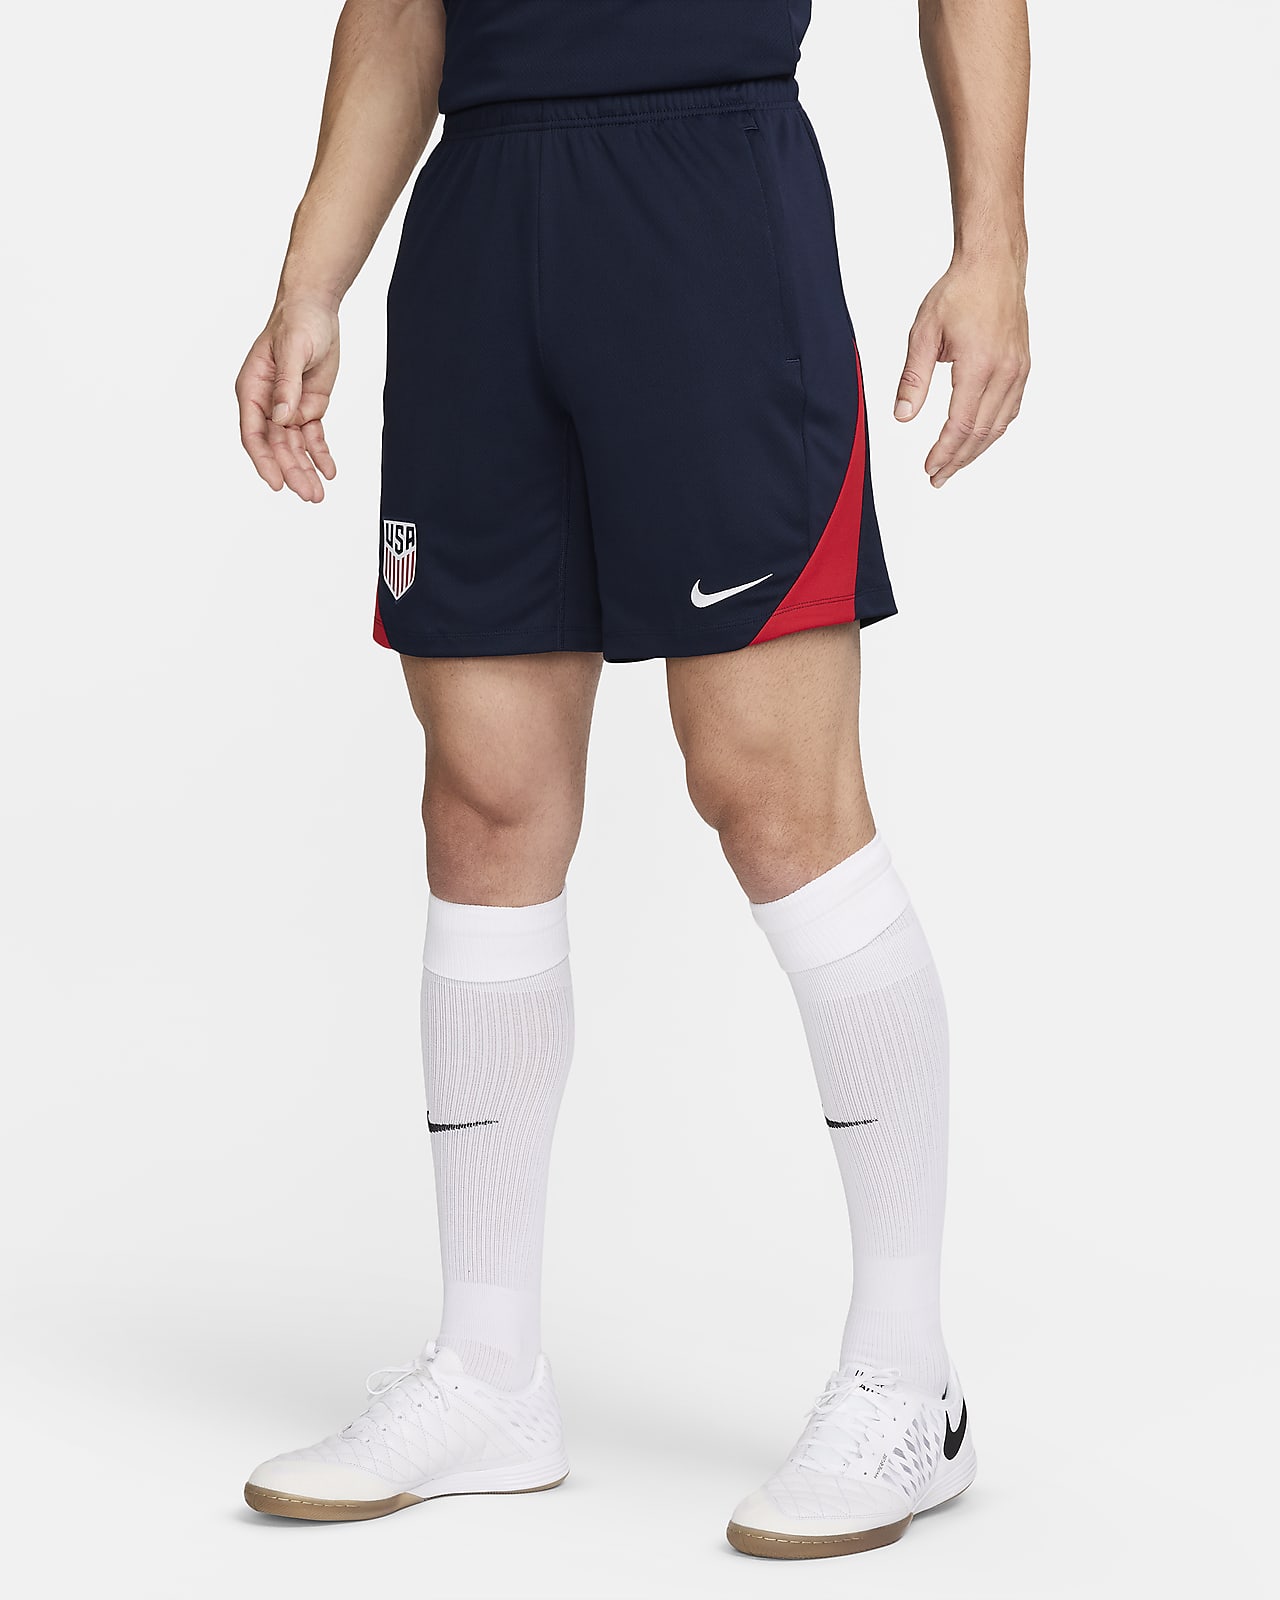 USMNT Strike Men's Nike Dri-FIT Soccer Knit Shorts